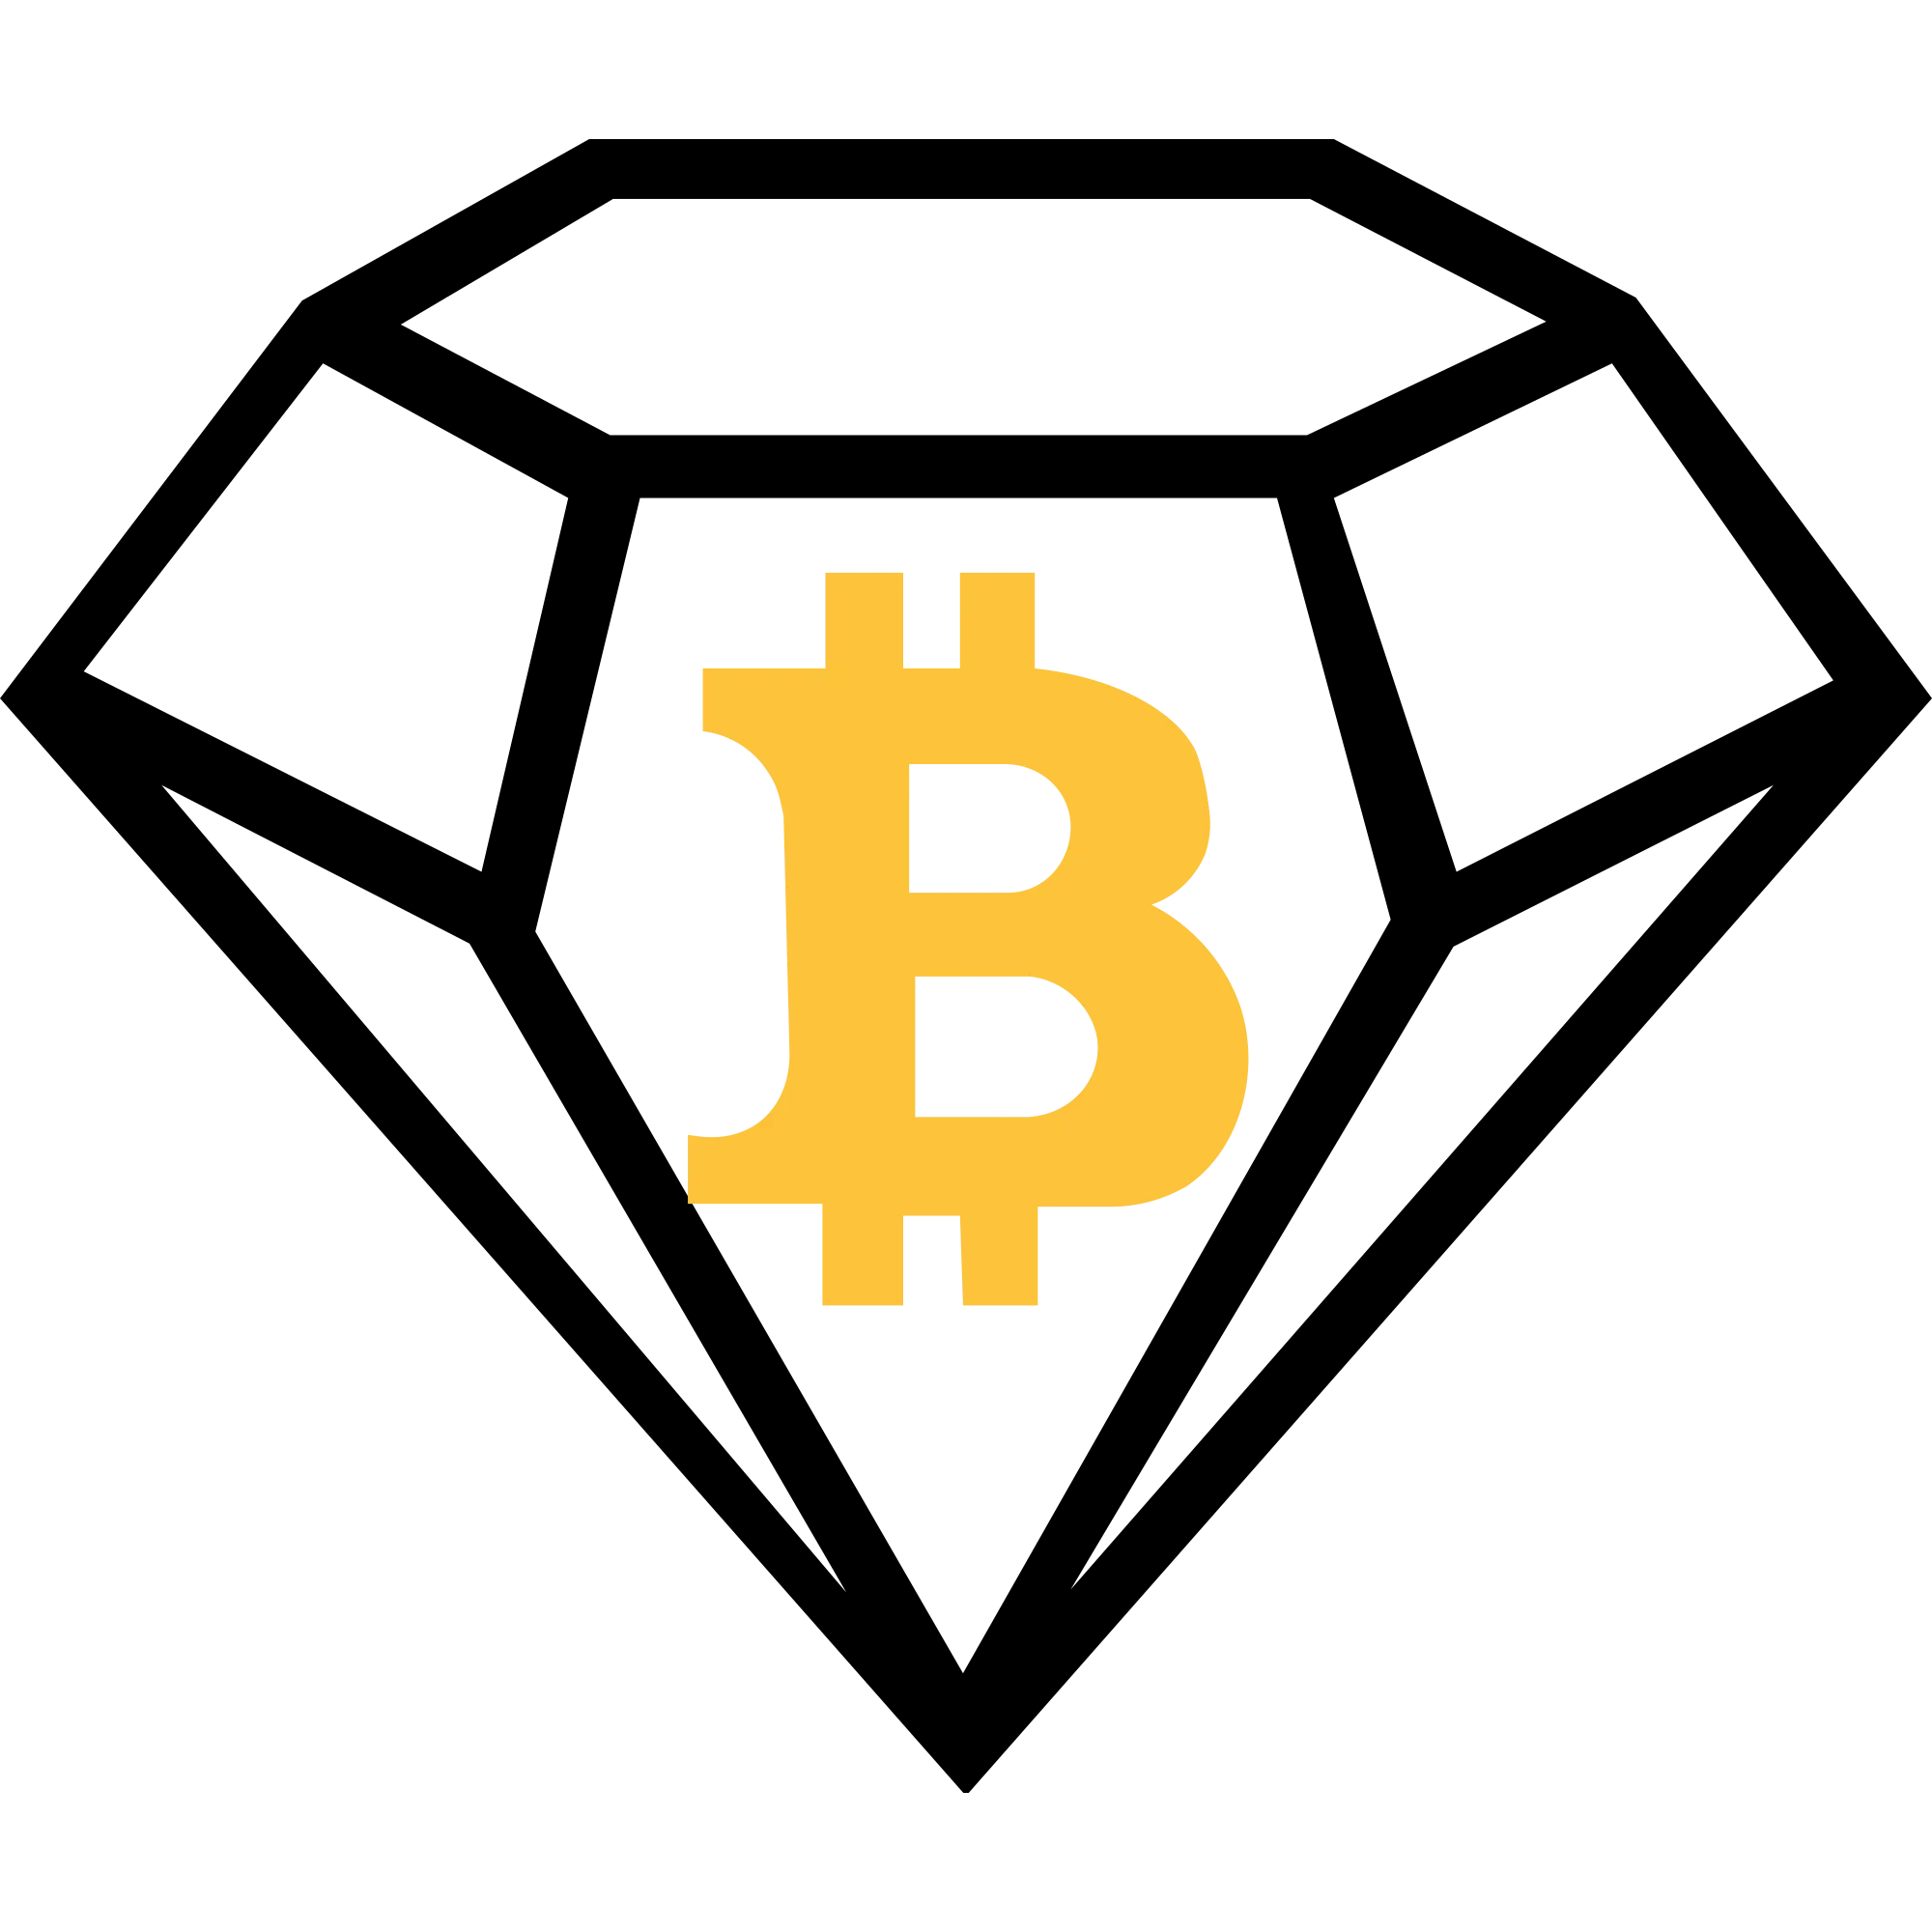 Bitcoin Diamond logo in png format